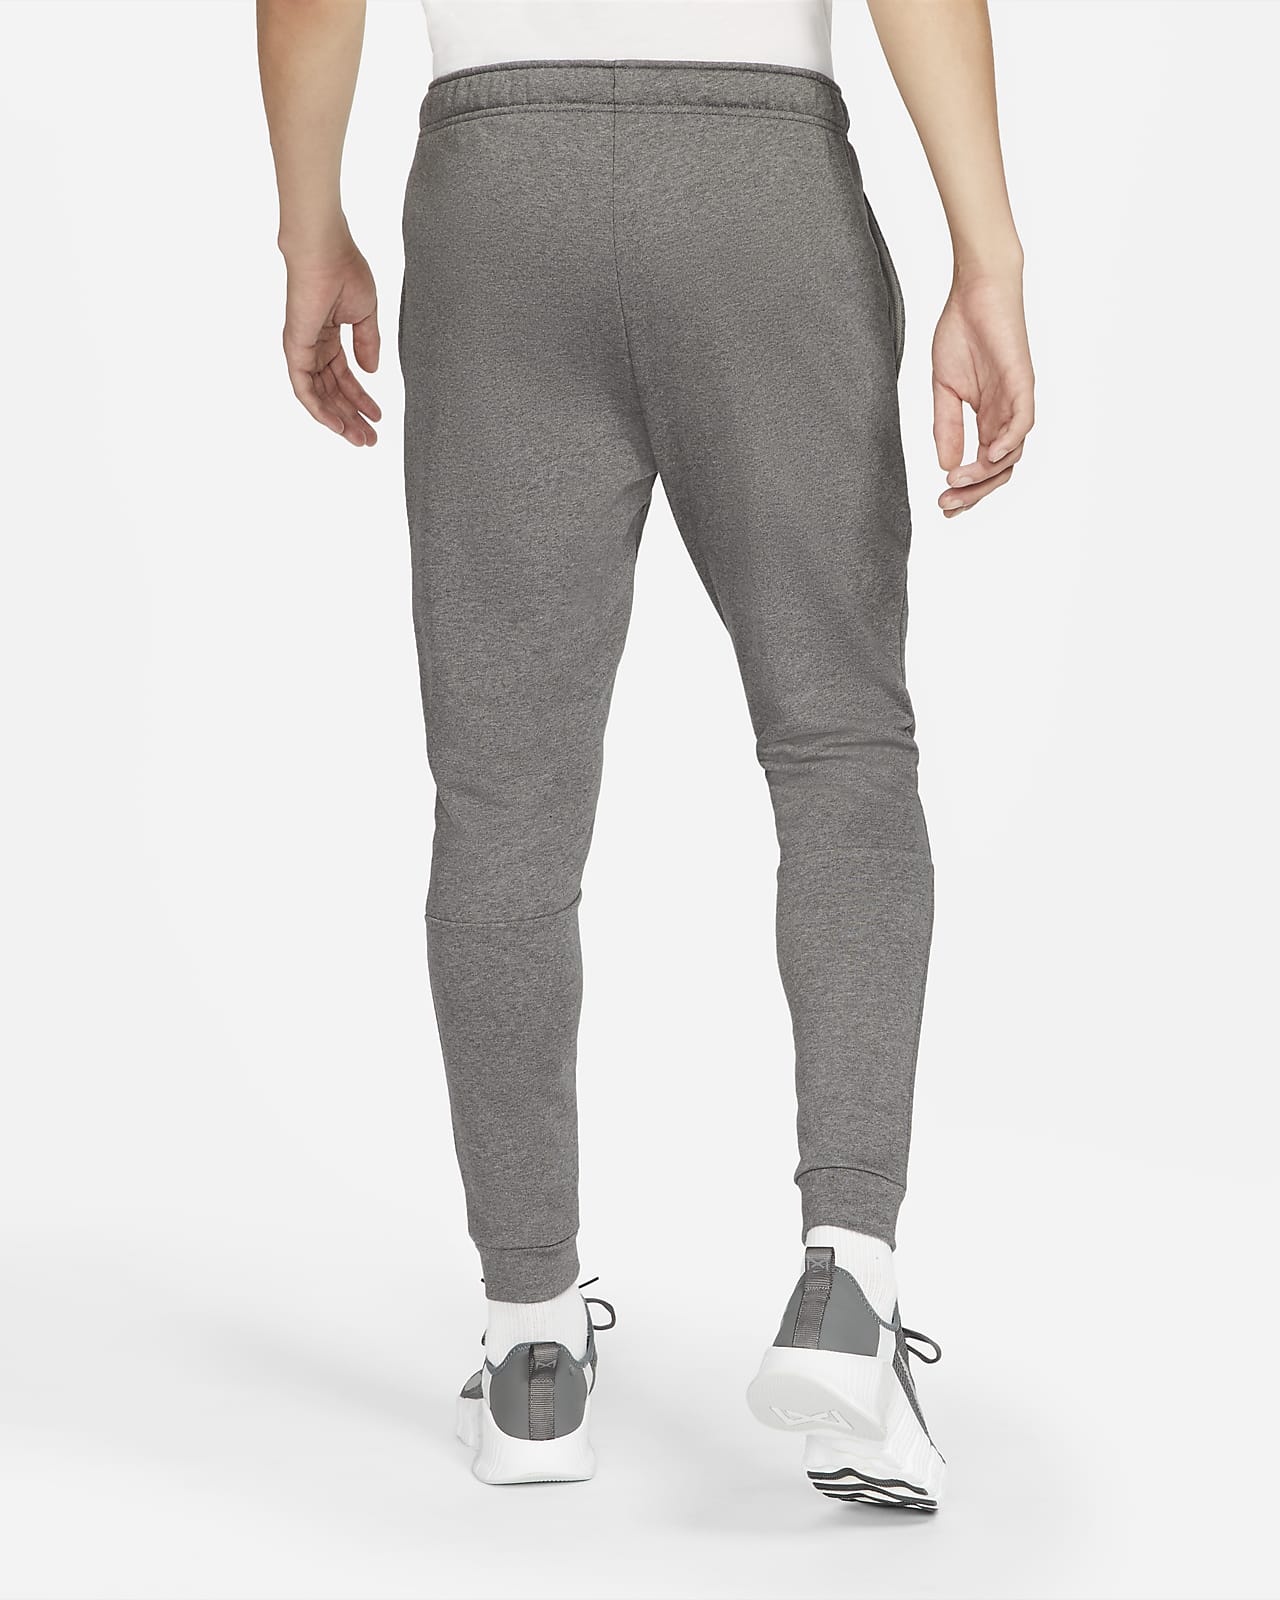 Men's Sweatpants Gym Tight-Fitting Workout Jogging Pants Slim-Fitting Pants